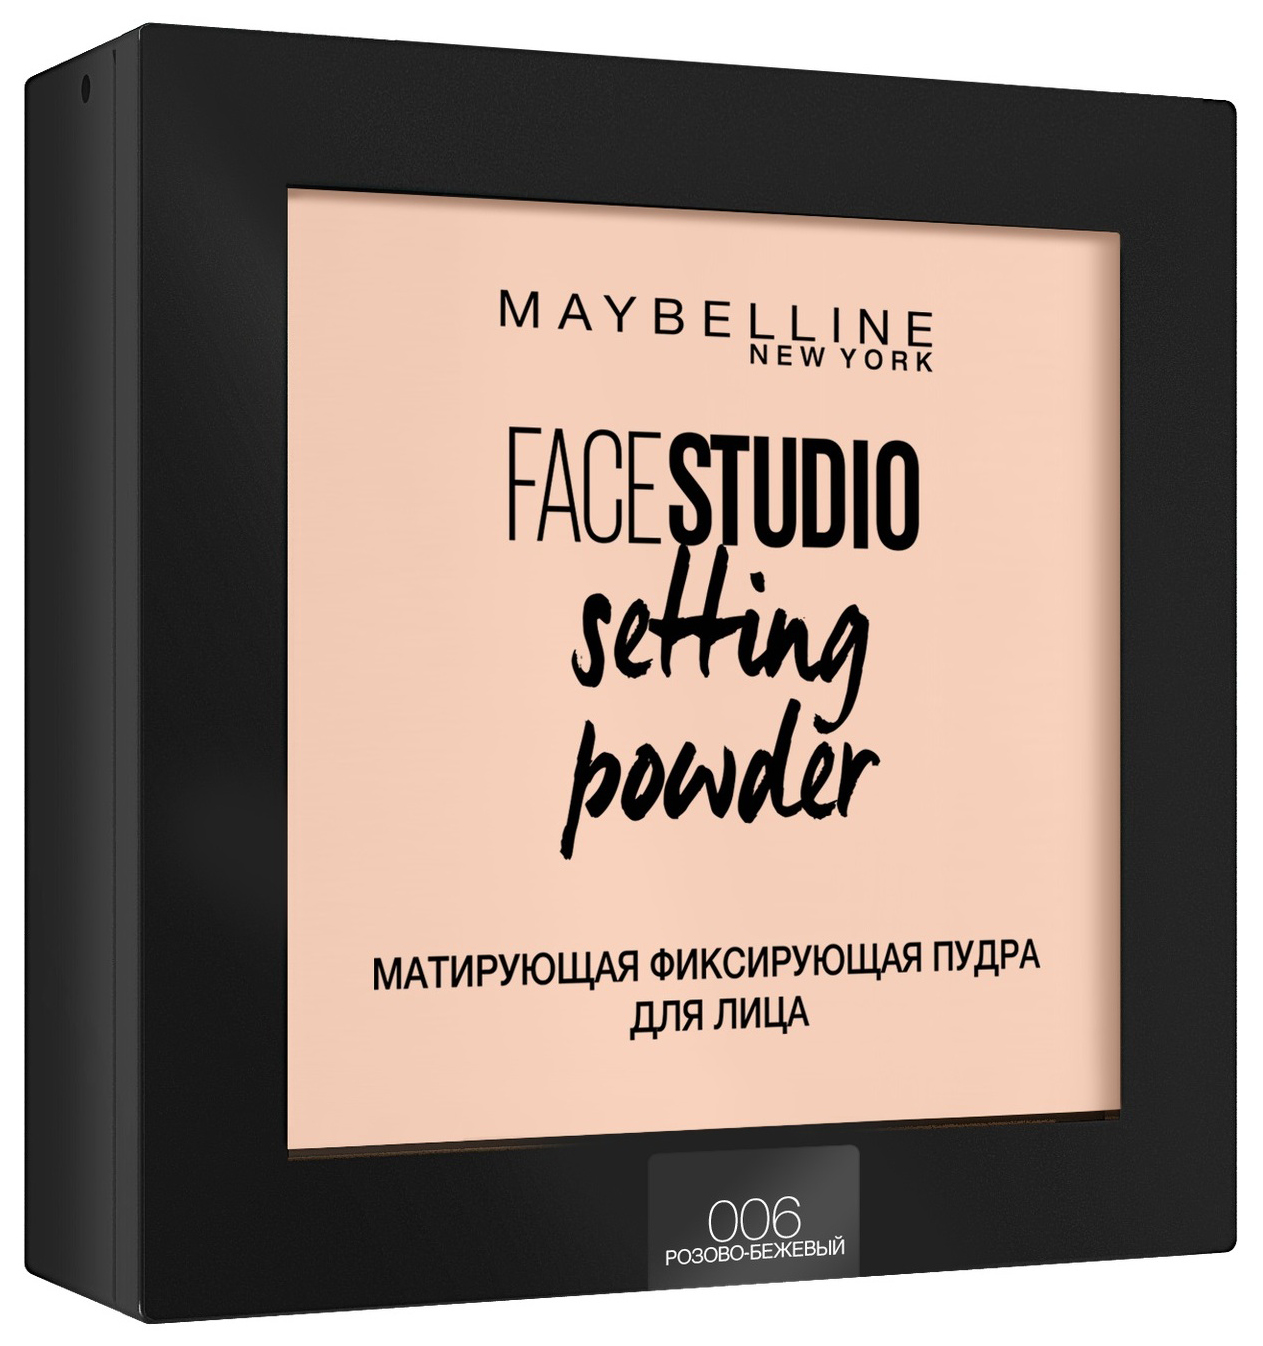 Купить Пудра Maybelline Face Studio Setting Powder 006 Розово-бежевый 9 г, Maybelline New York